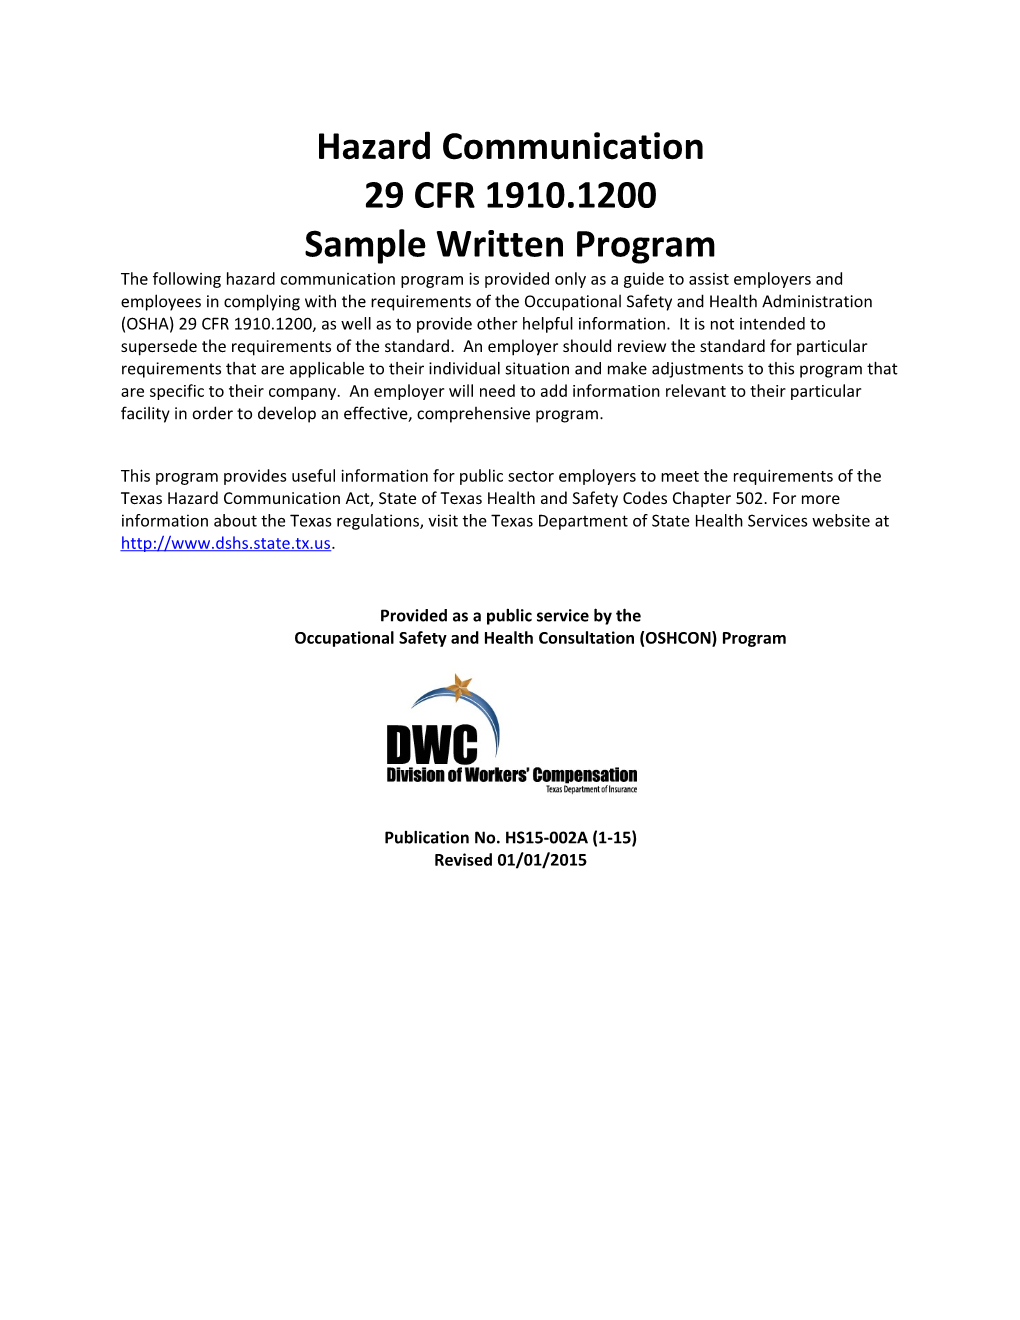 Hazard Communication29 CFR 1910.1200Sample Written Program